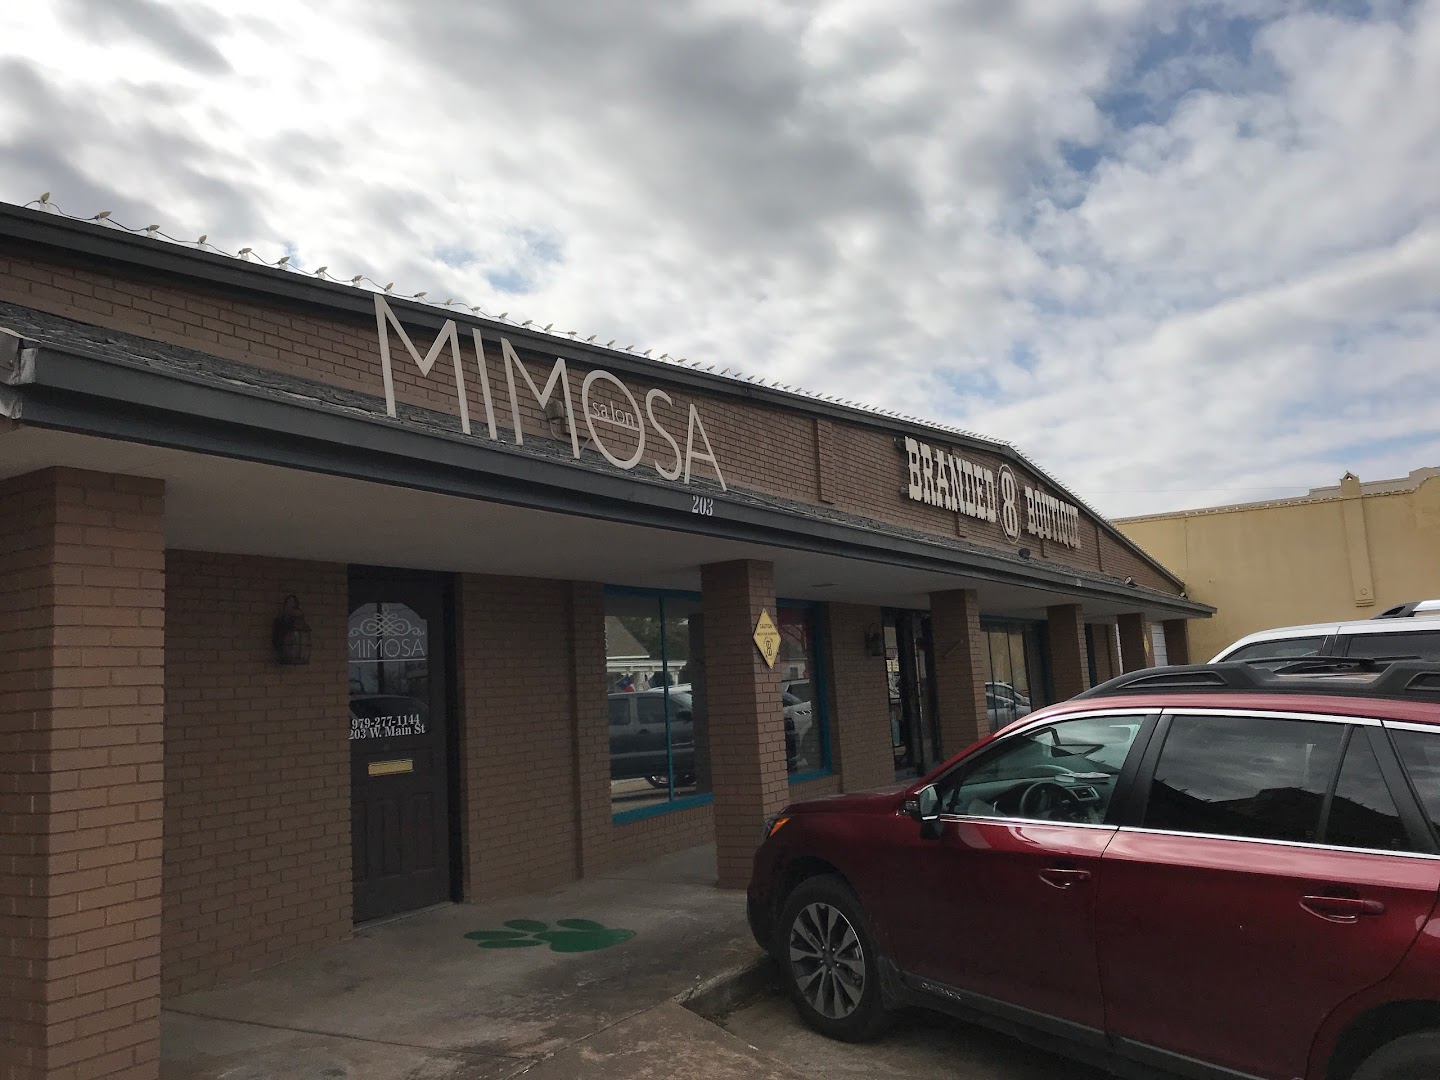 Mimosa Salon LLC